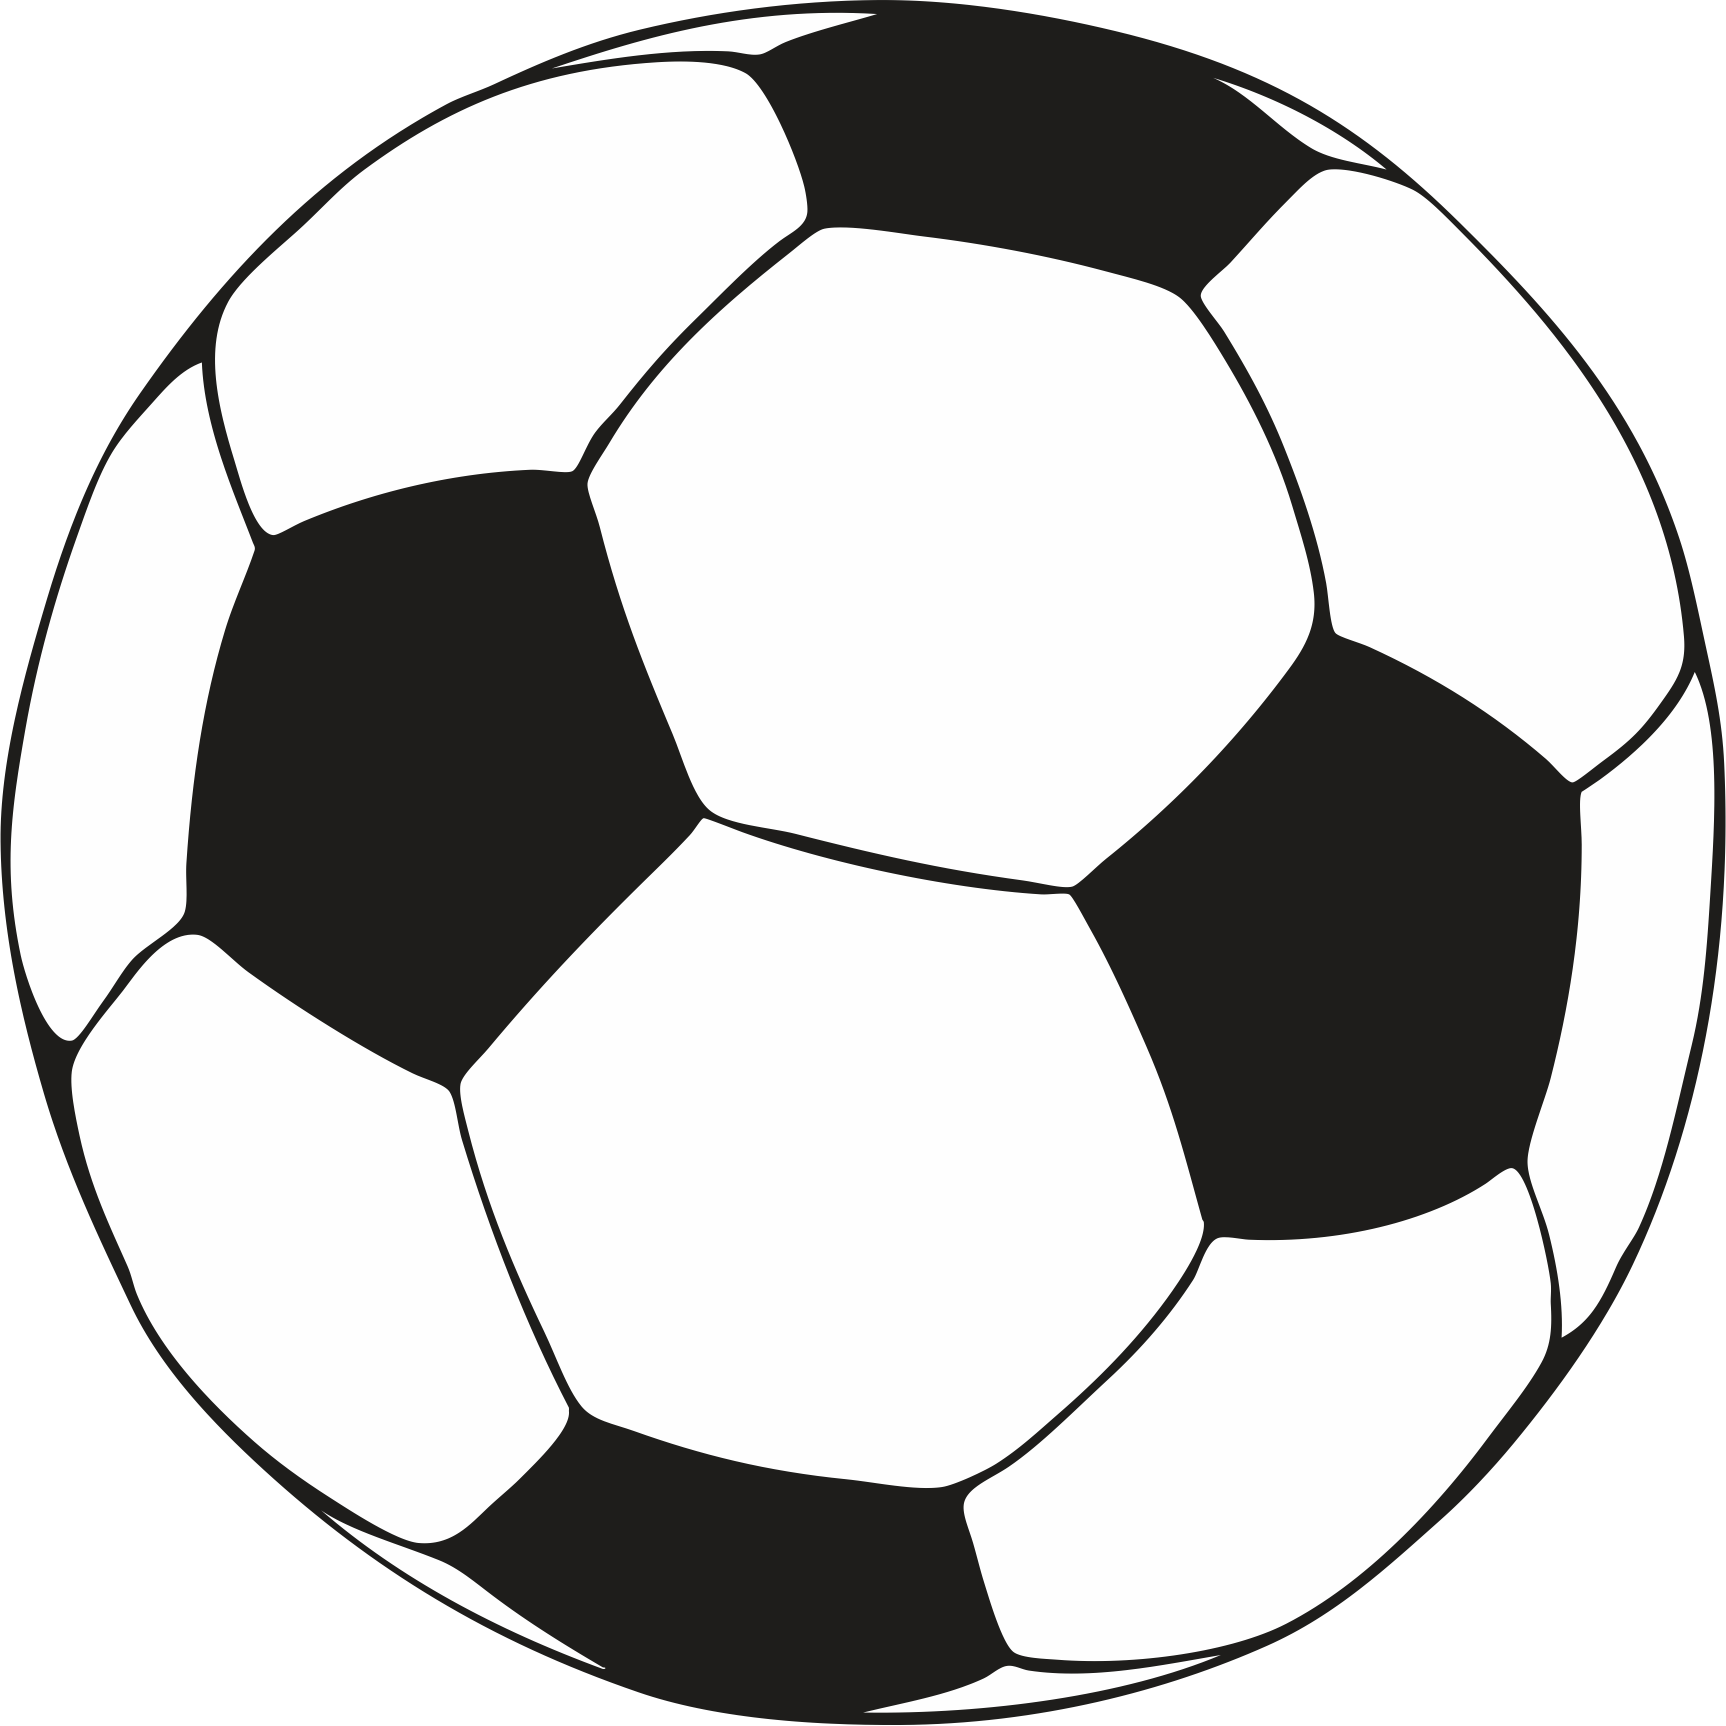 Soccer ball soccer clipart image football player kicking a 2